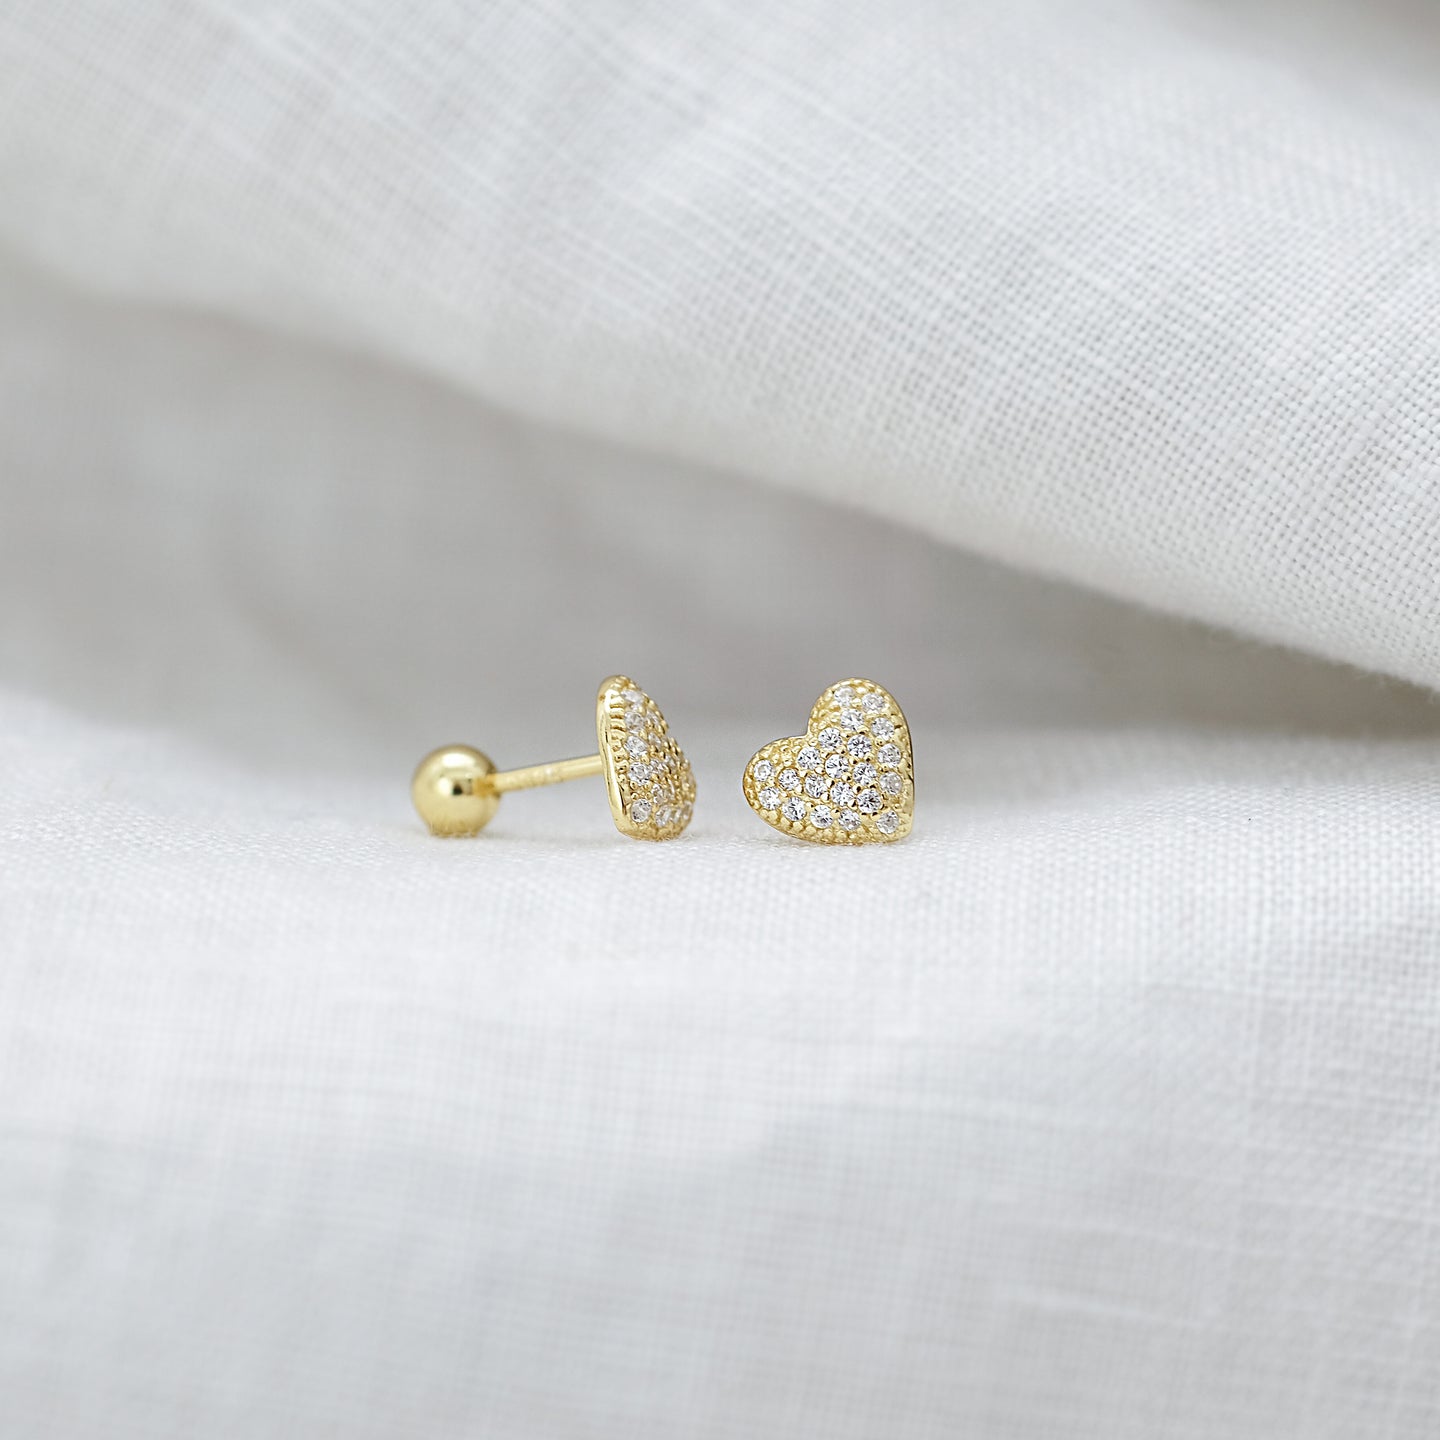 files/lenda-cz-stud-earrings-18k-gold-vermeil-1.jpg